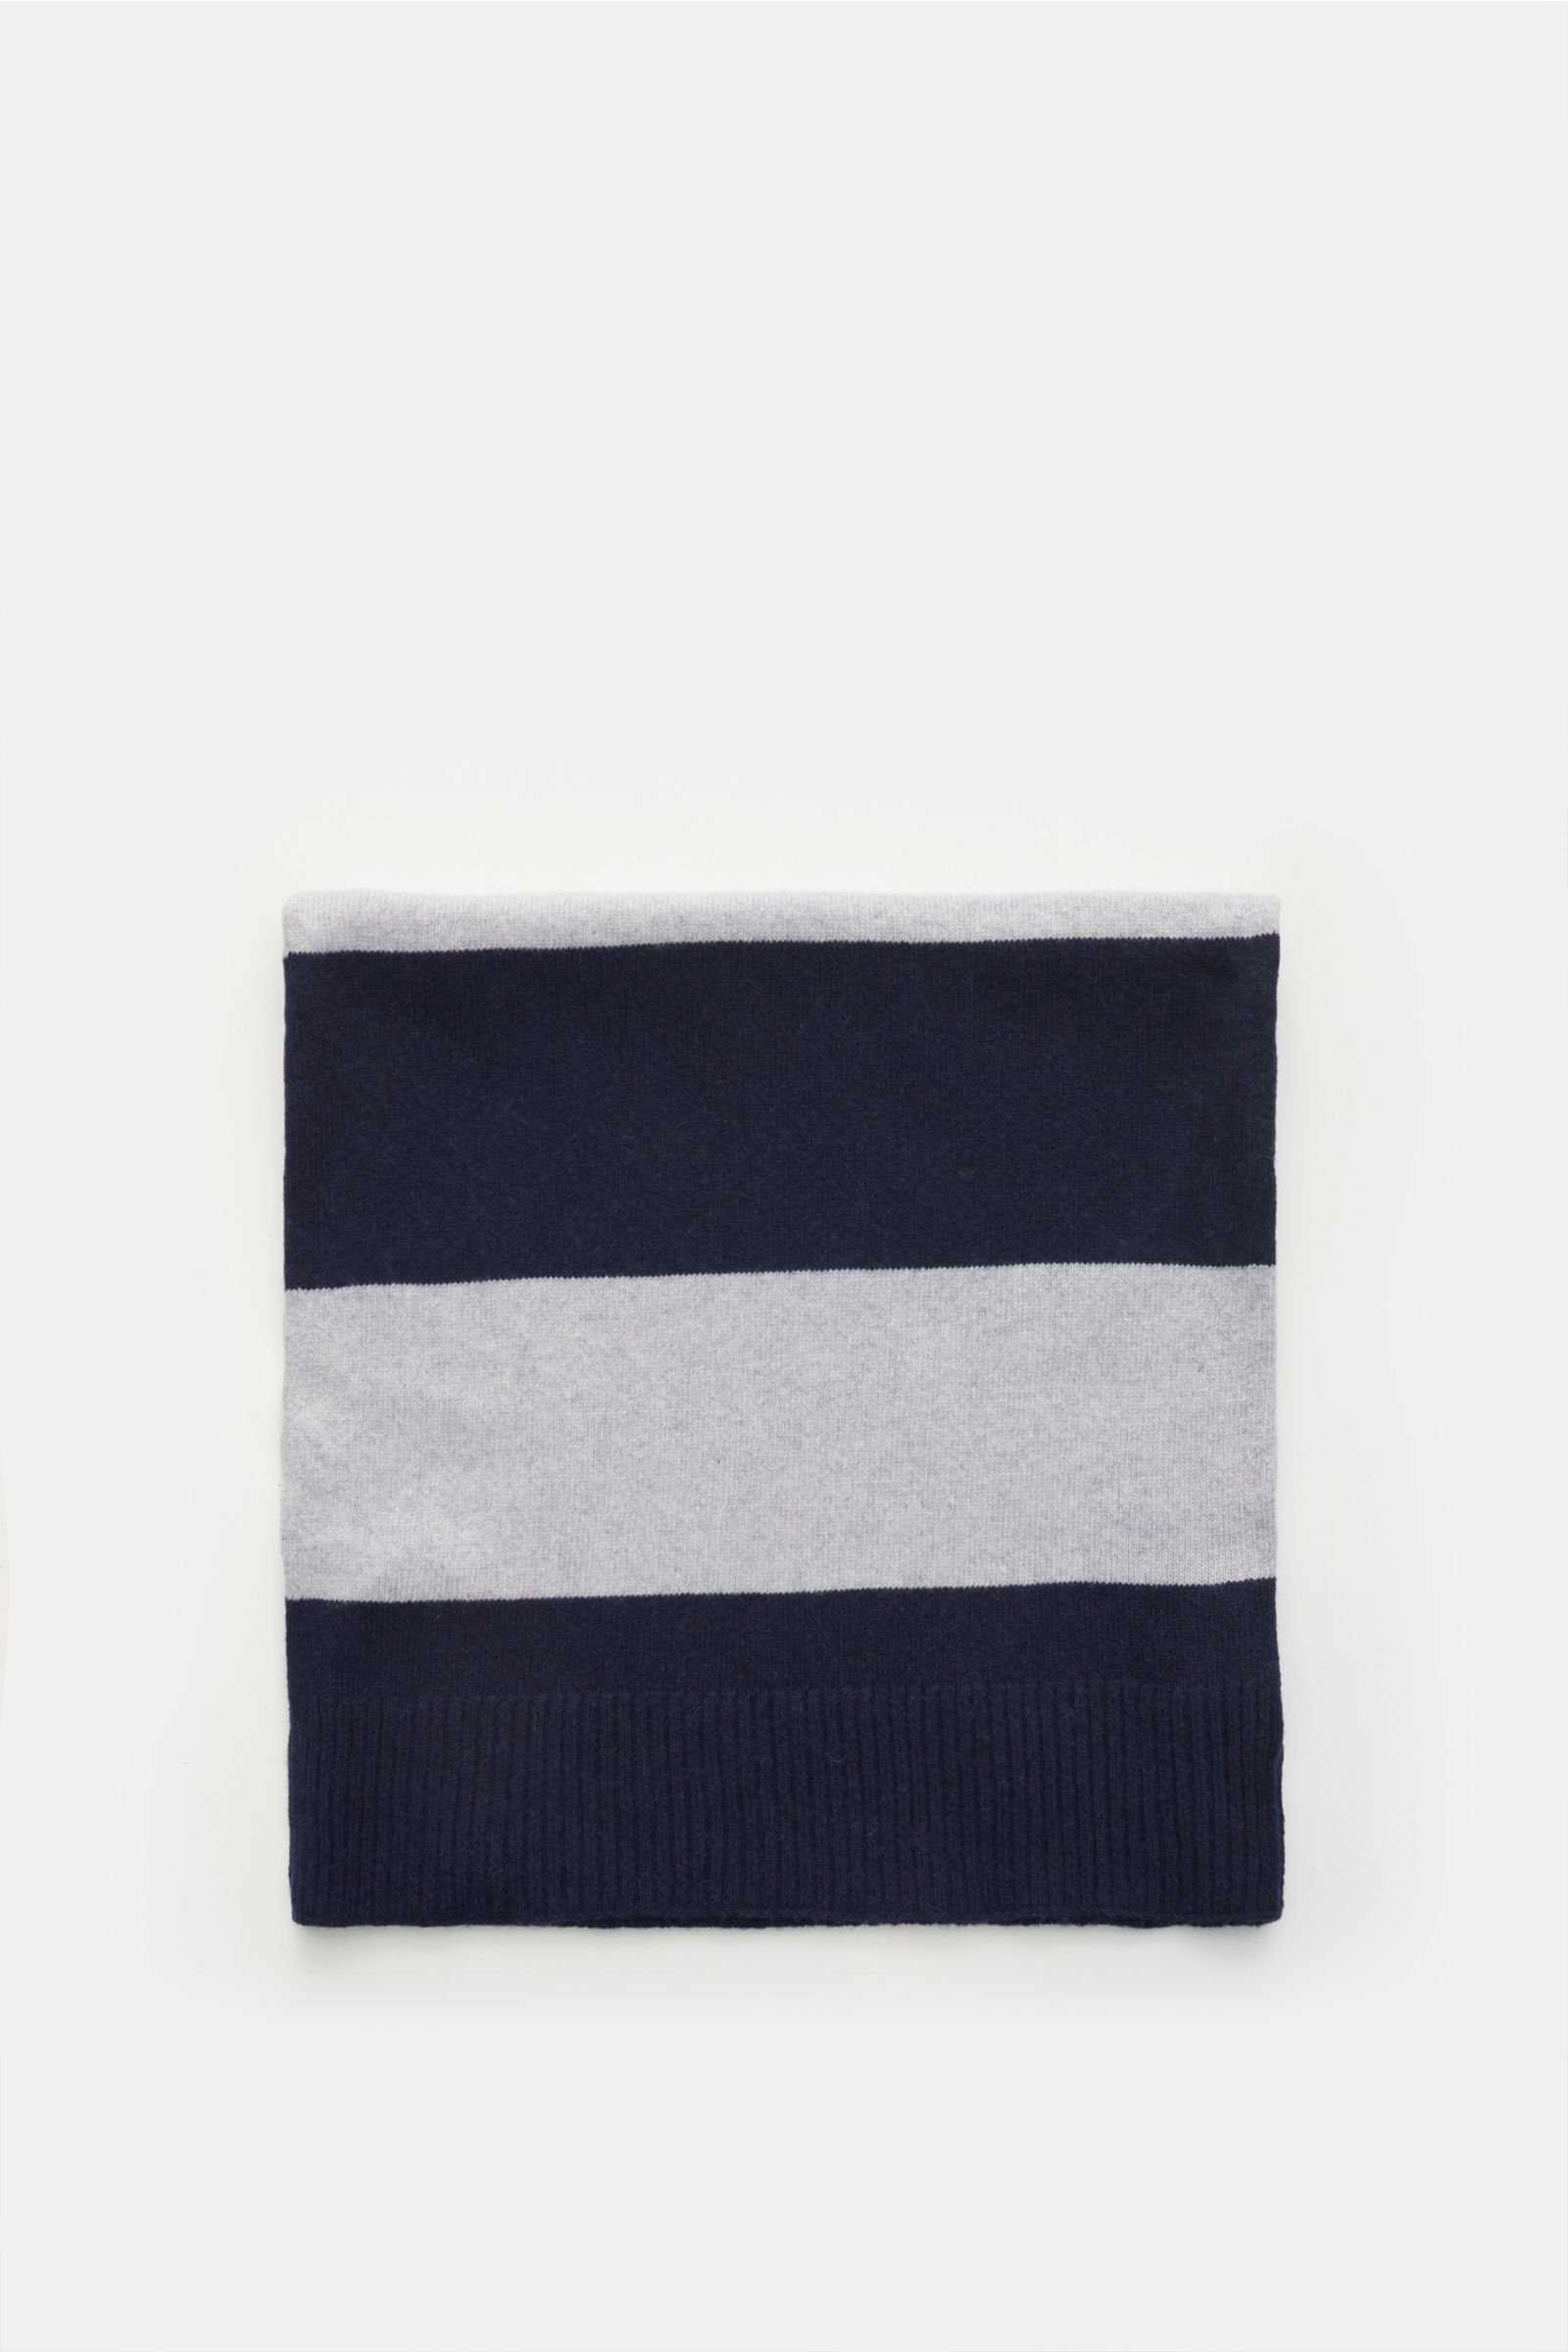 Cashmere scarf navy/light grey striped